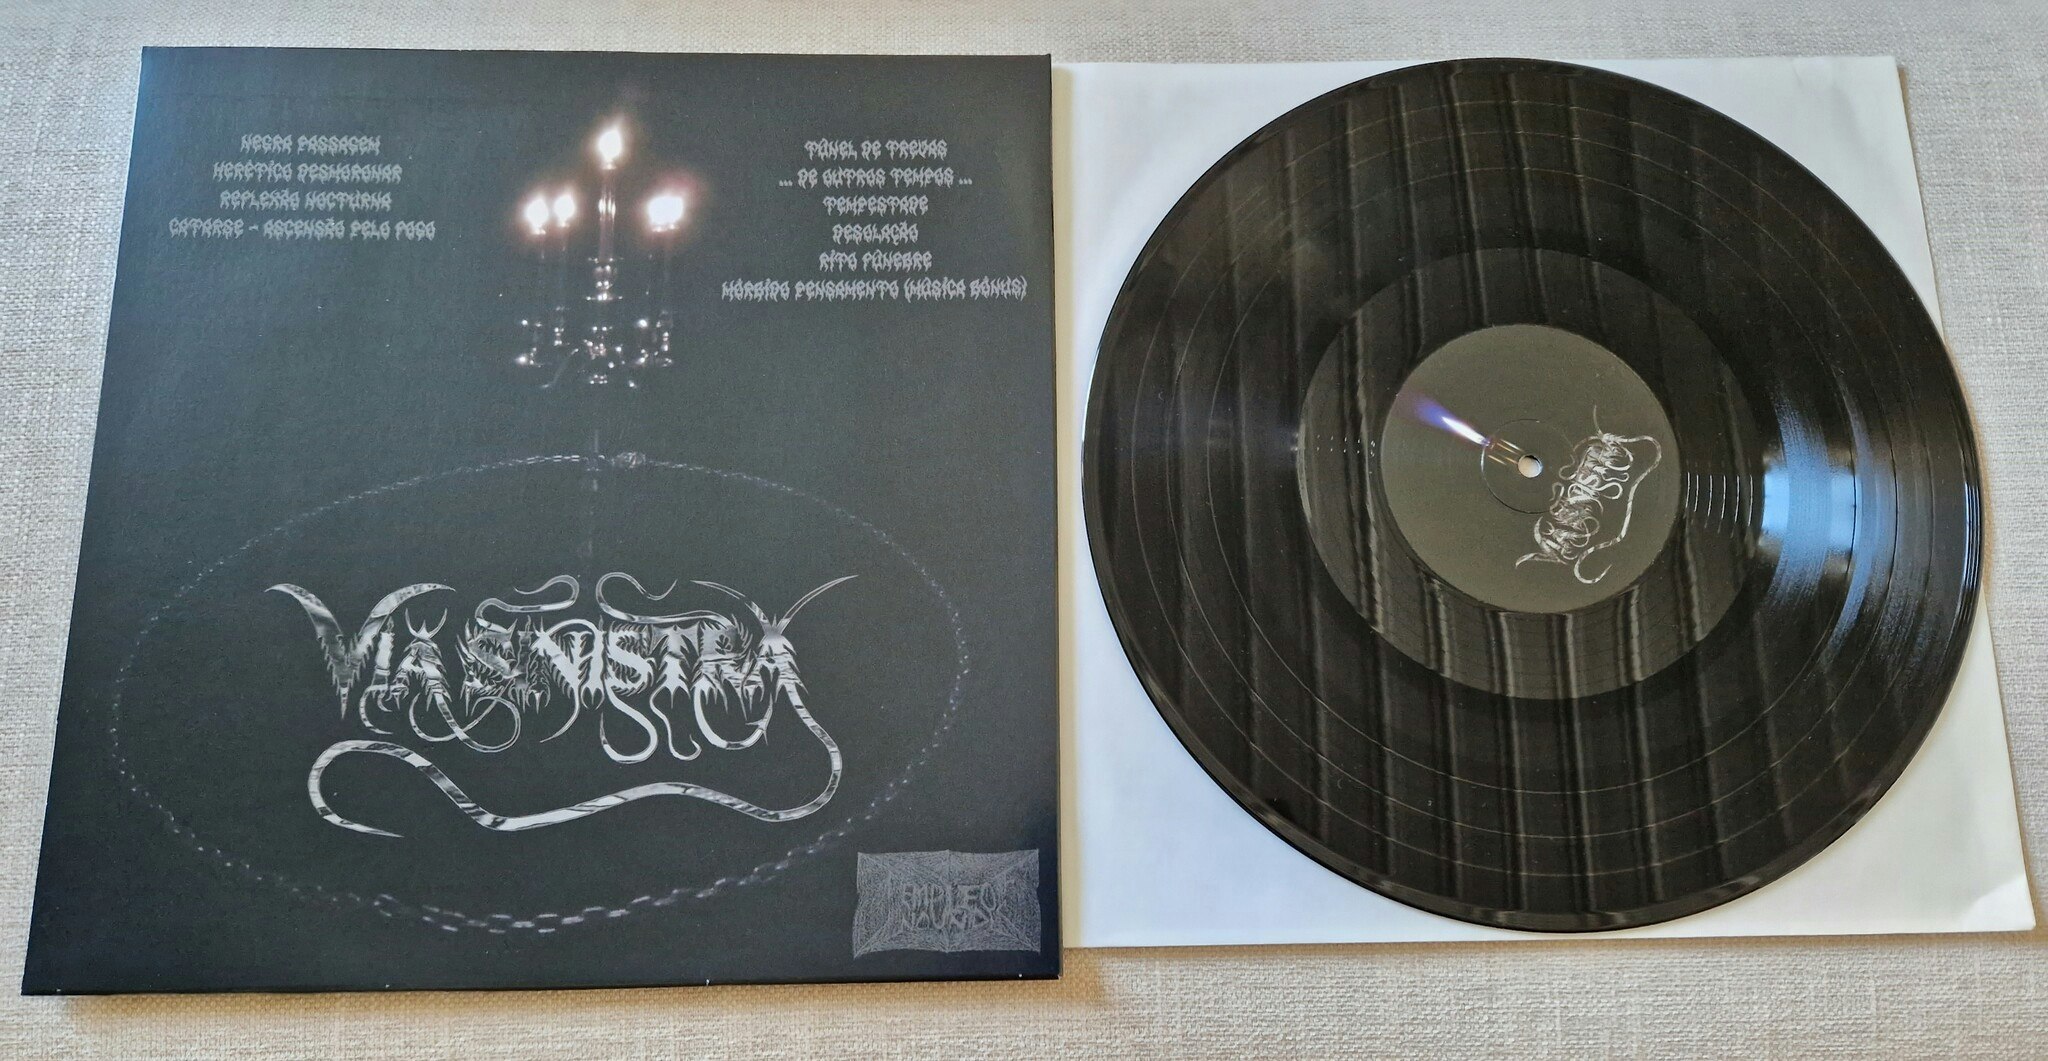 Via Sinistra, Via Sinistra. Vinyl LP